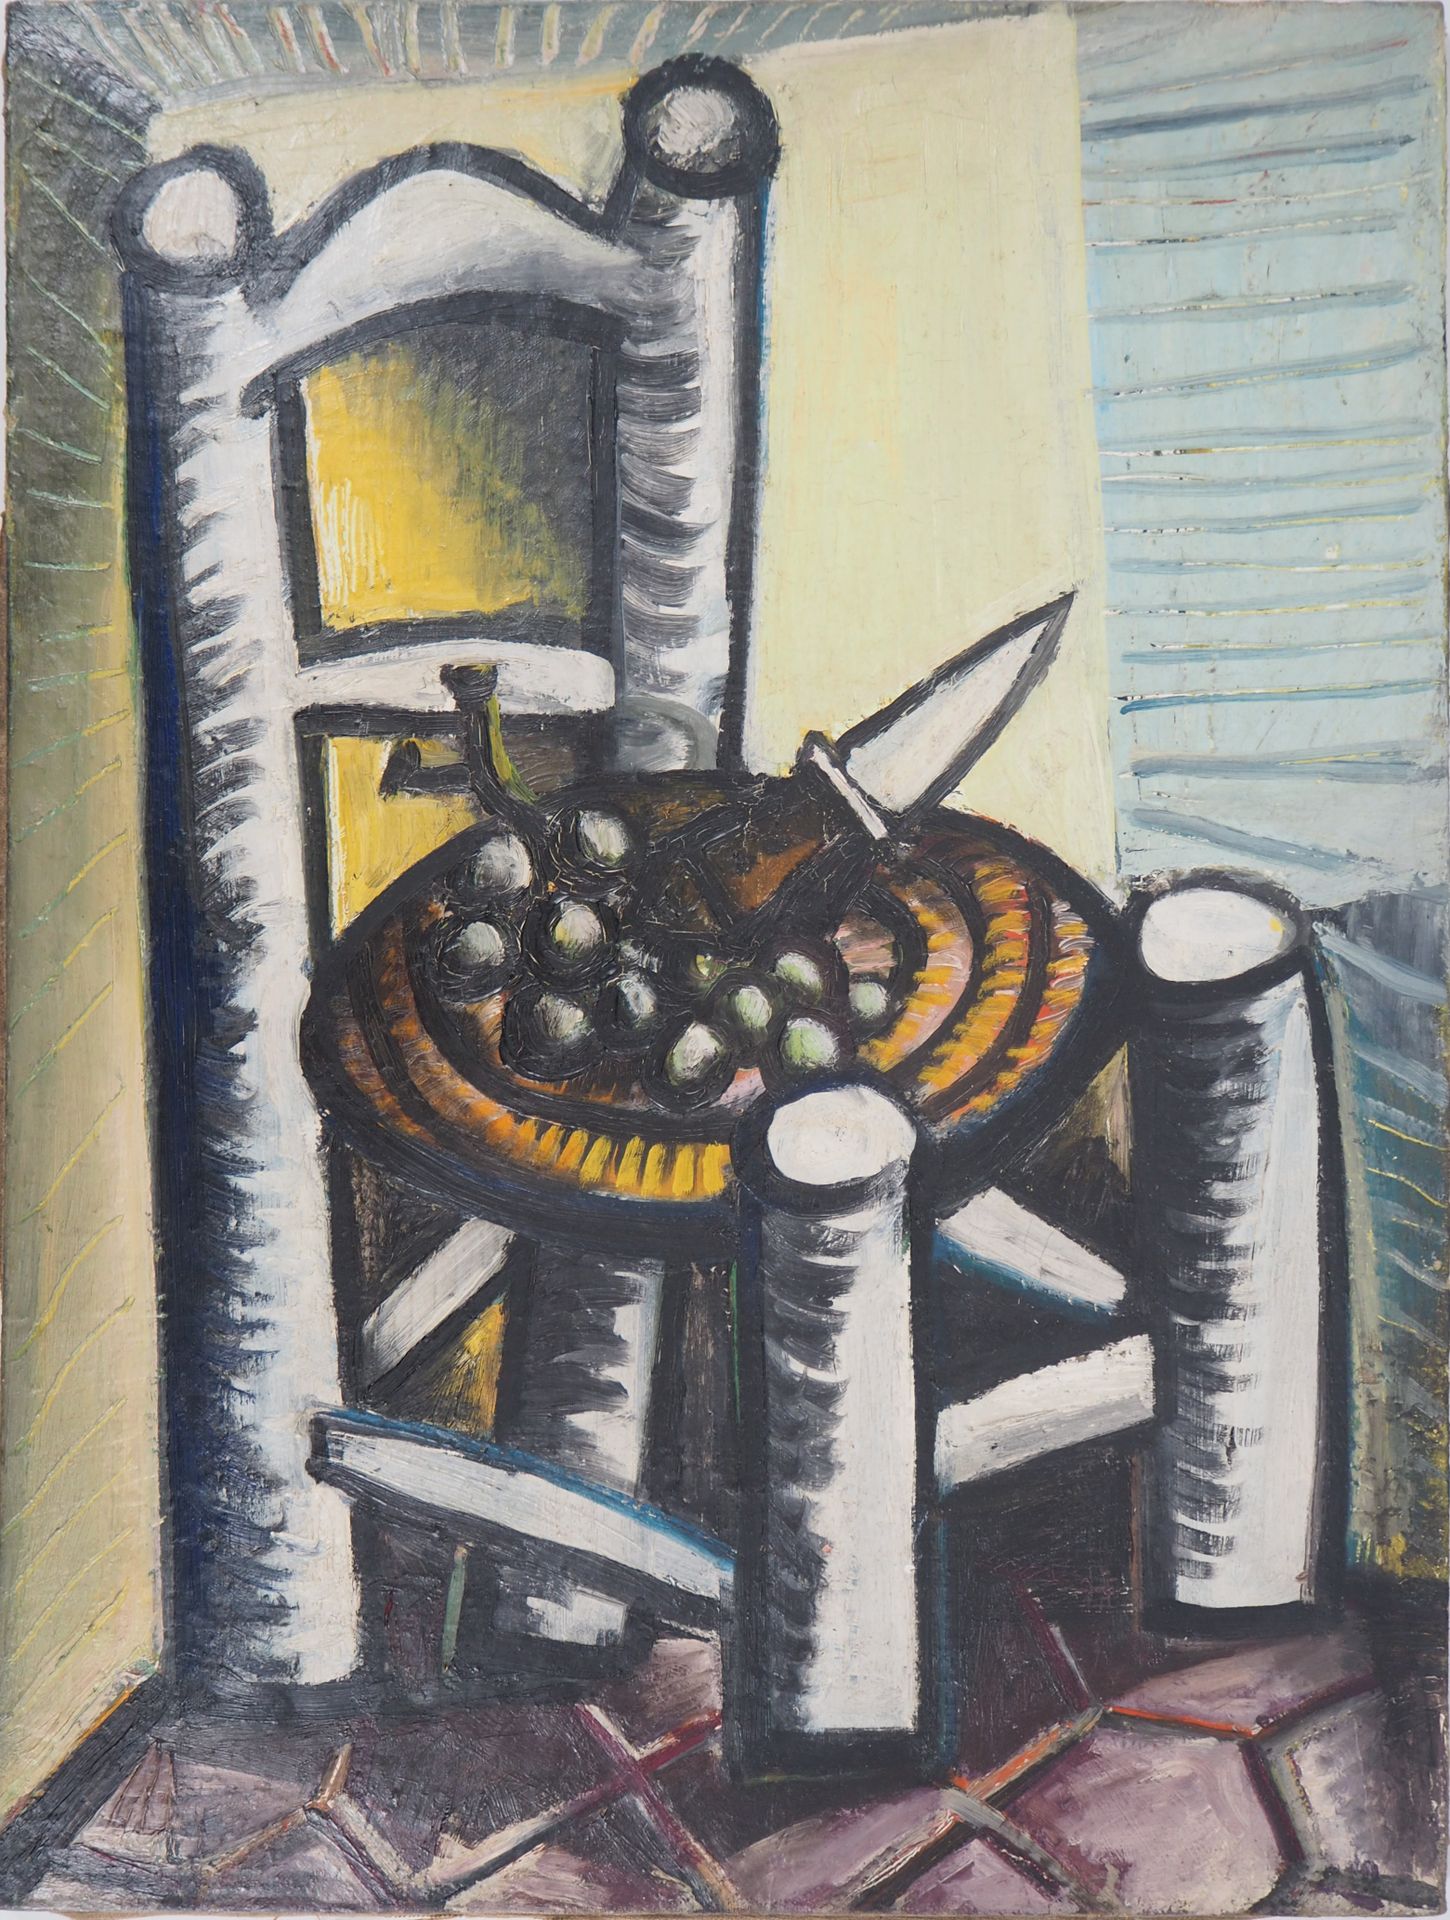 Carlos CARNERO 卡洛斯-卡内罗(1922-1980)

向毕加索致敬：立体派椅子

布面油画

背面有签名、日期和标题

在画布的背面有另一幅画的&hellip;